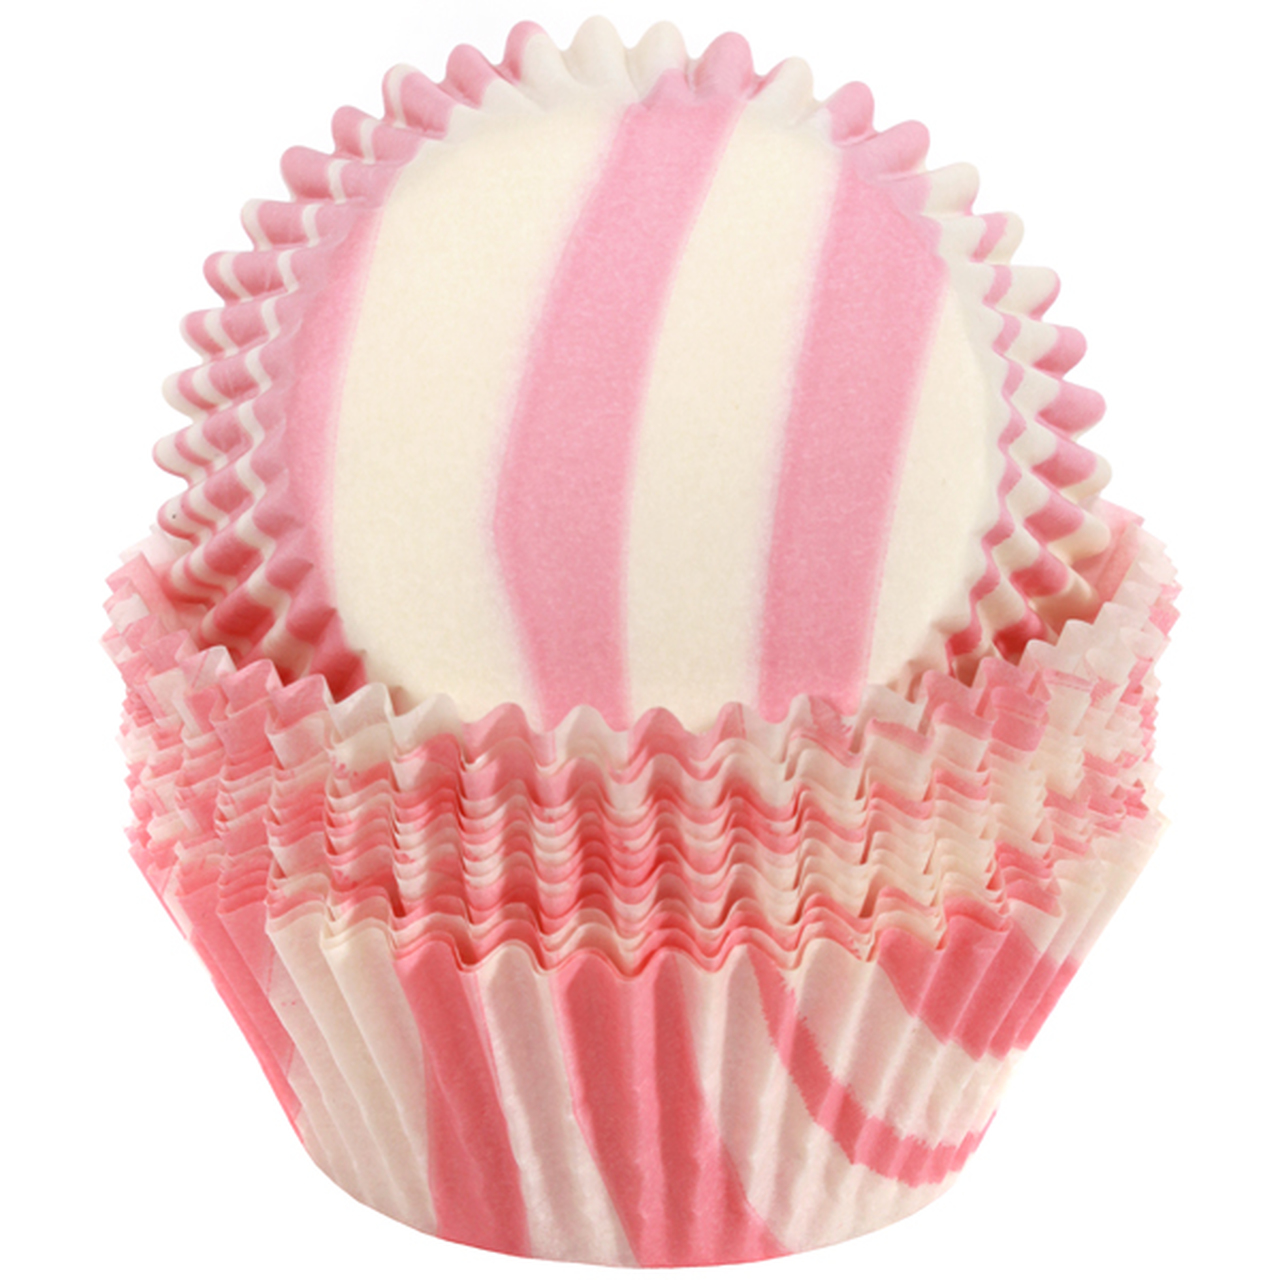 Animal Print - Pink Zebra Stripe Baking cups